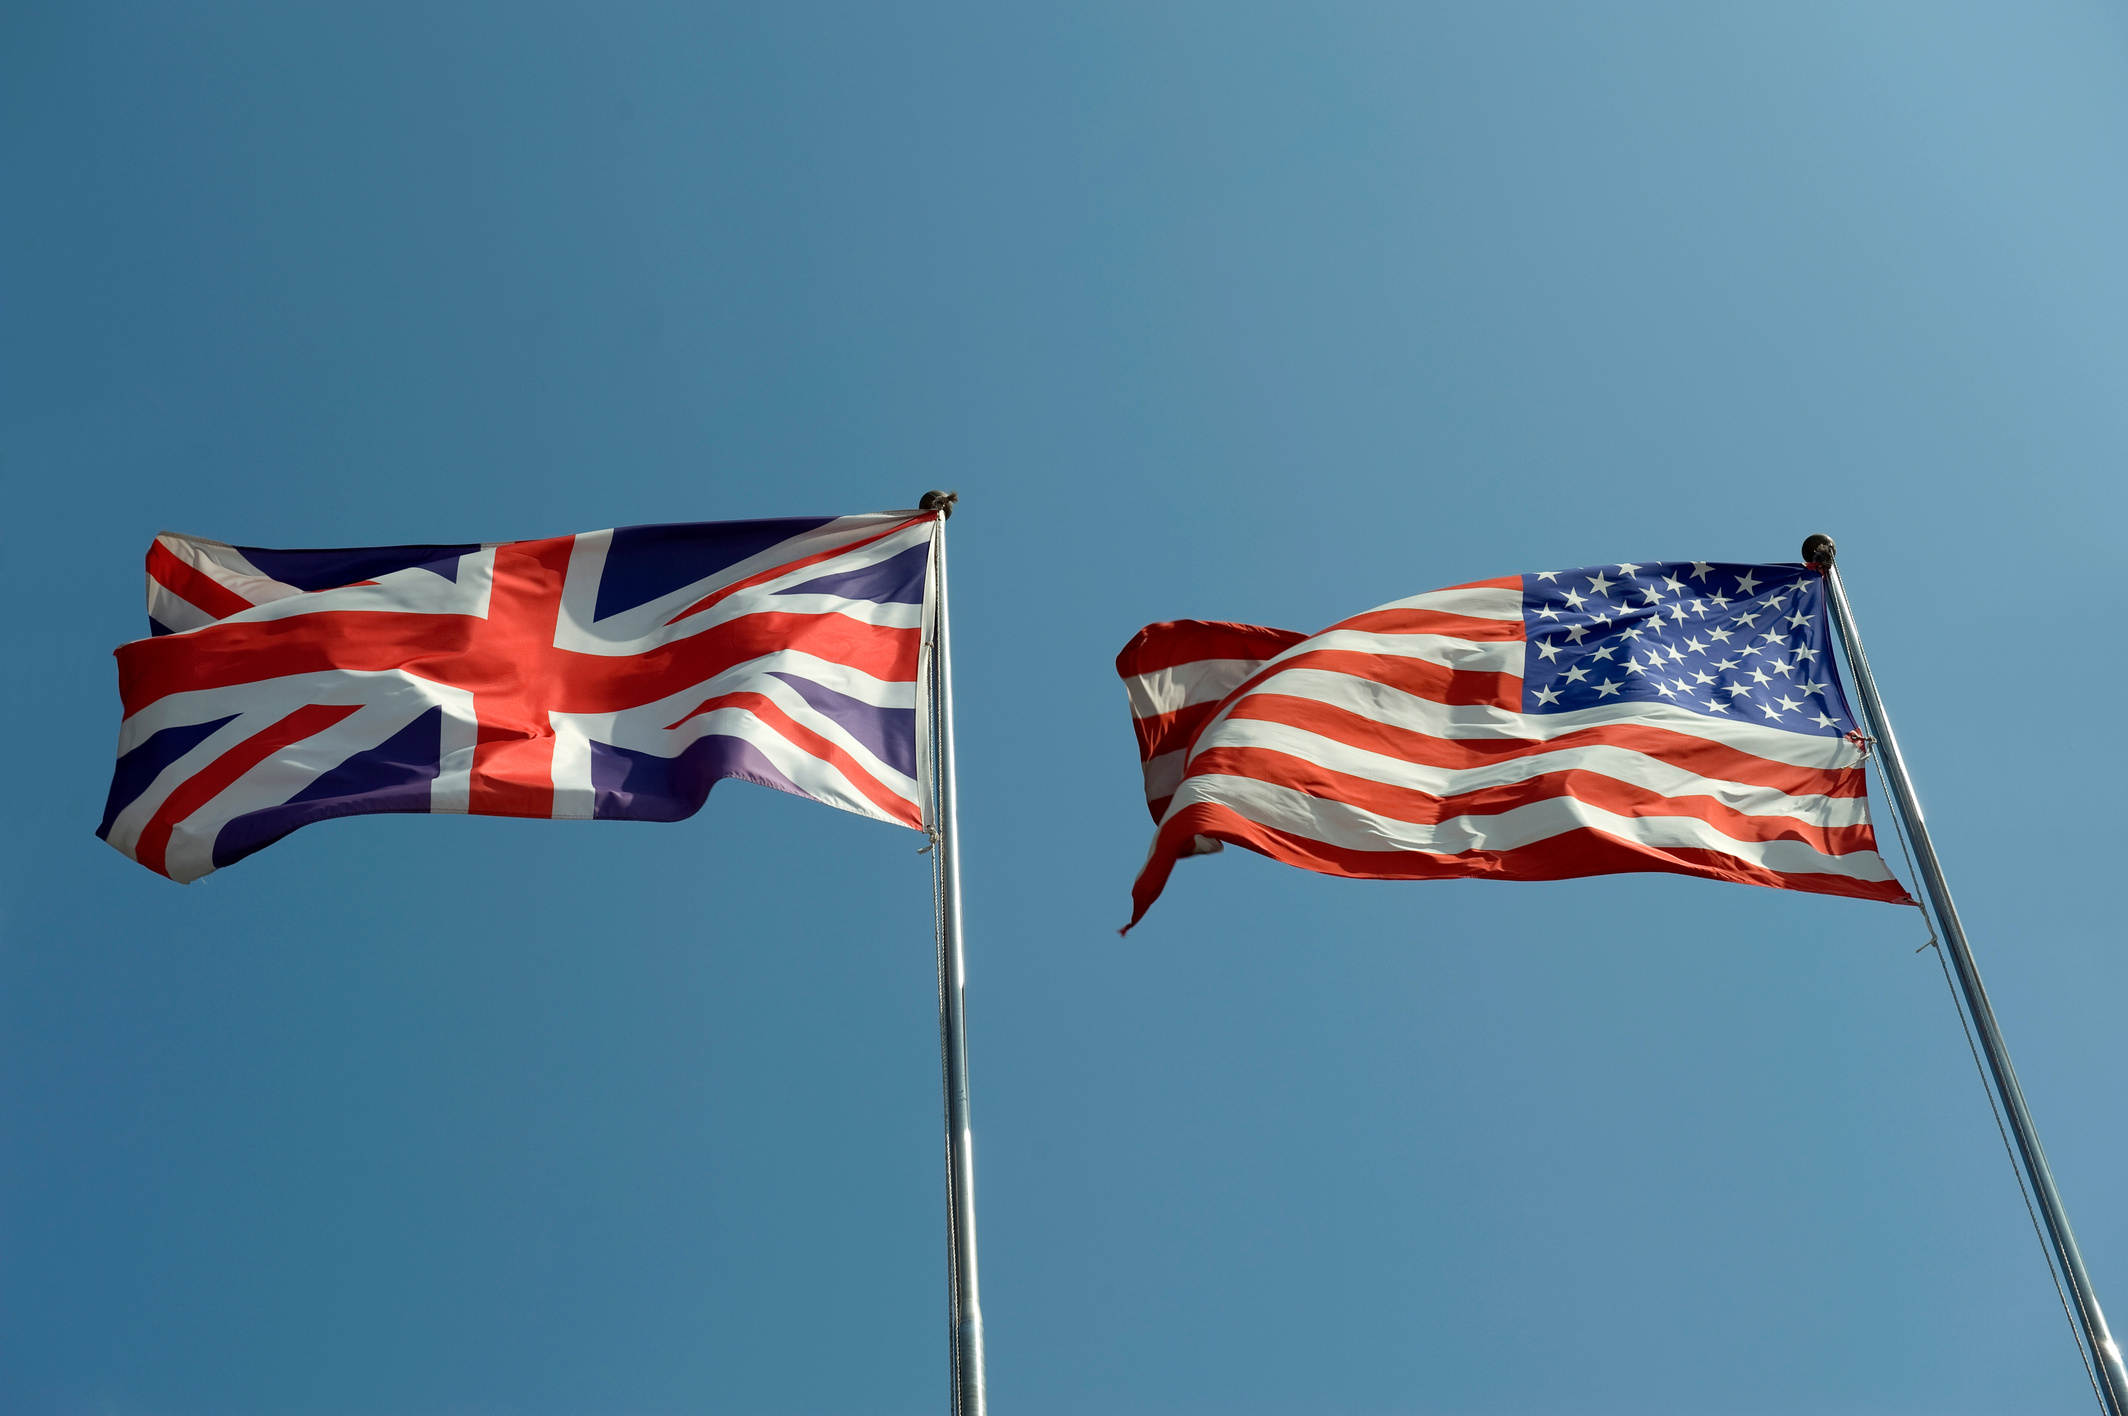 United Kingdom and USA flags